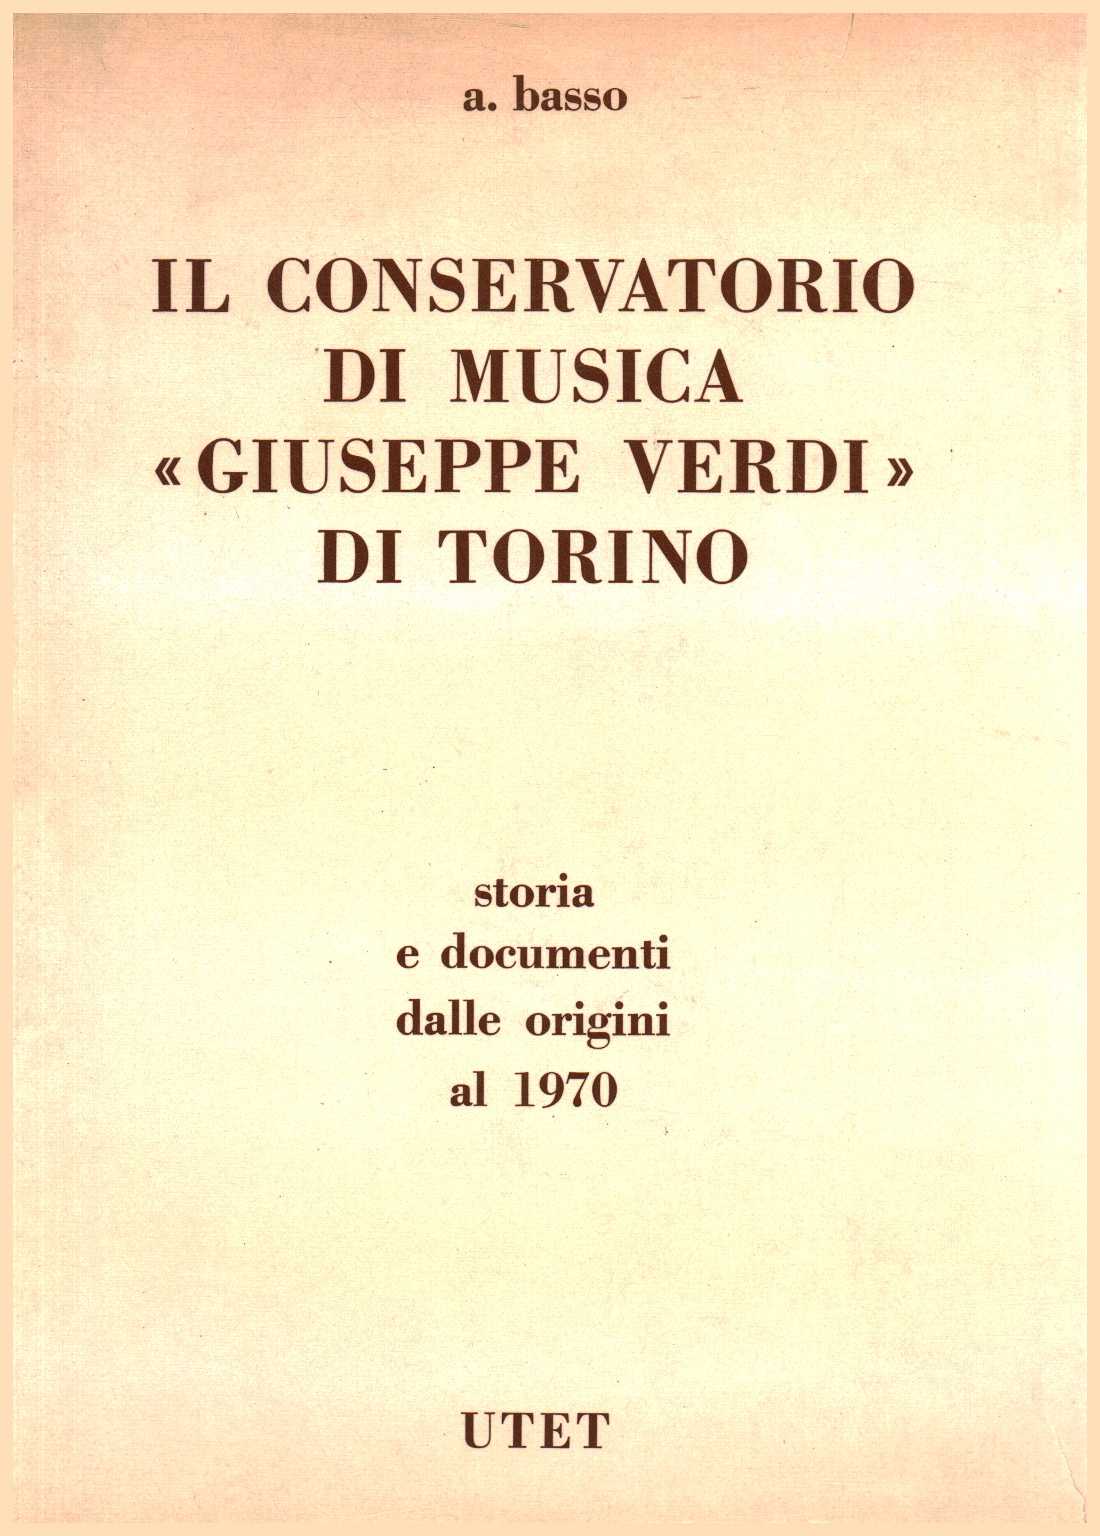 Le Conservatoire de Musique "Giuseppe Verdi" di Tor, s.un.